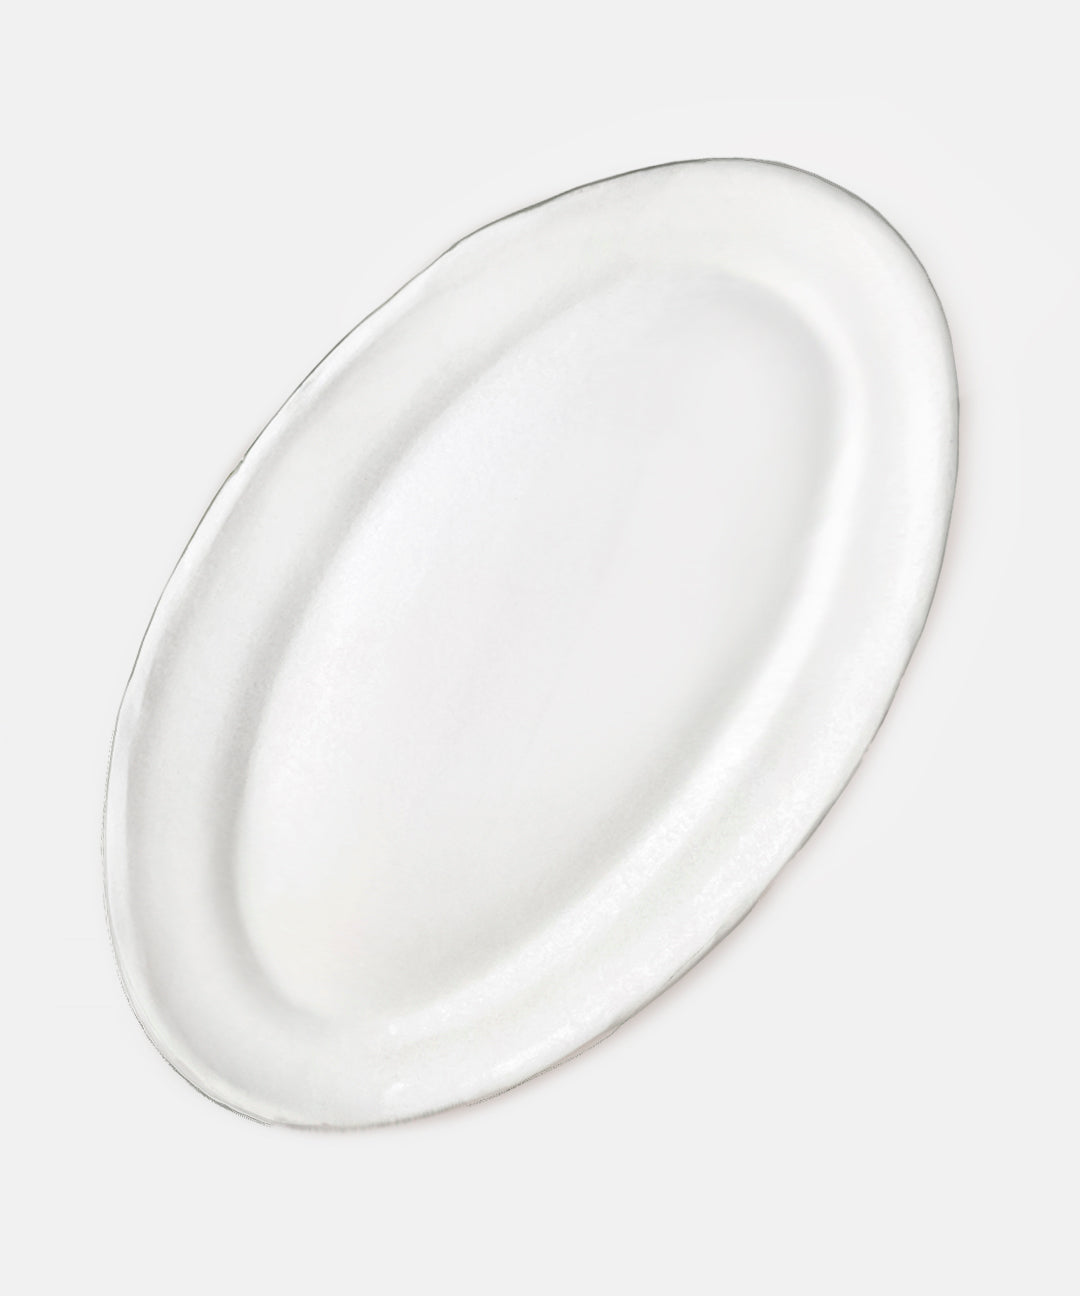   Shallow Oval Serving Platter  